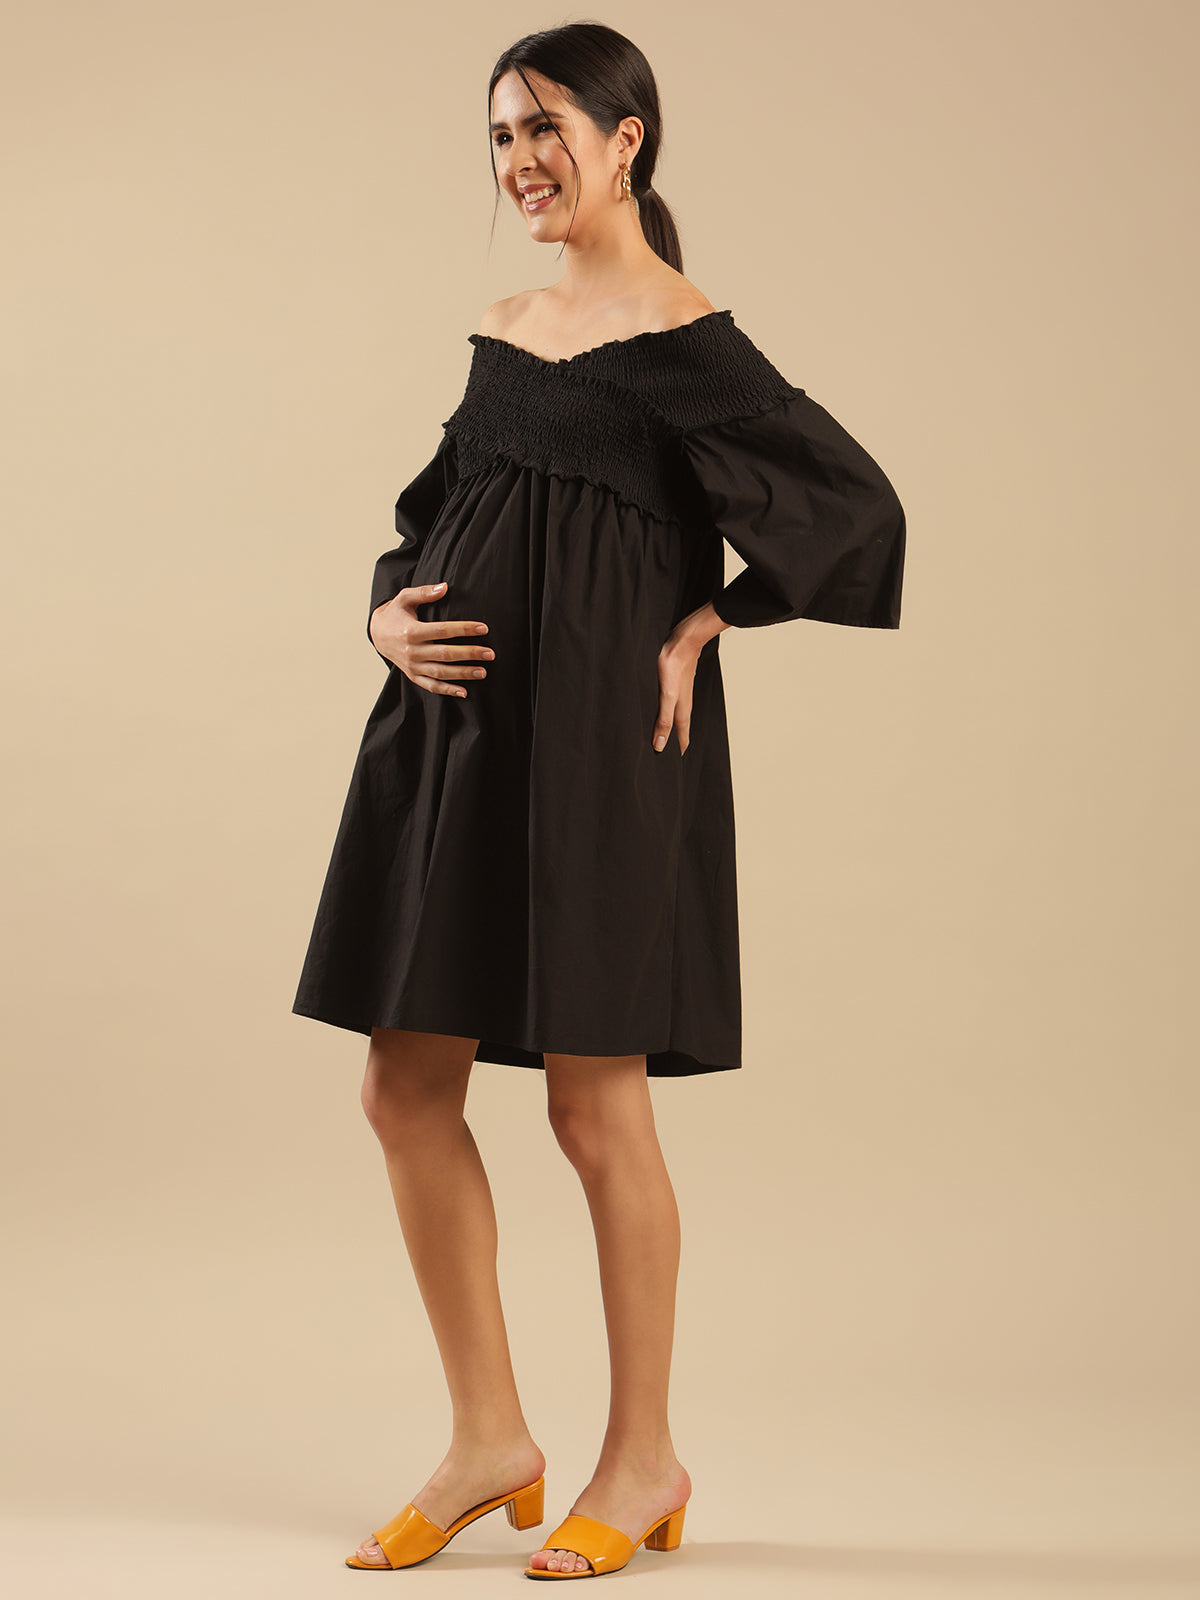 Blair Black Cotton Womens Nursing Maternity Dress with Hidden Nursing Features